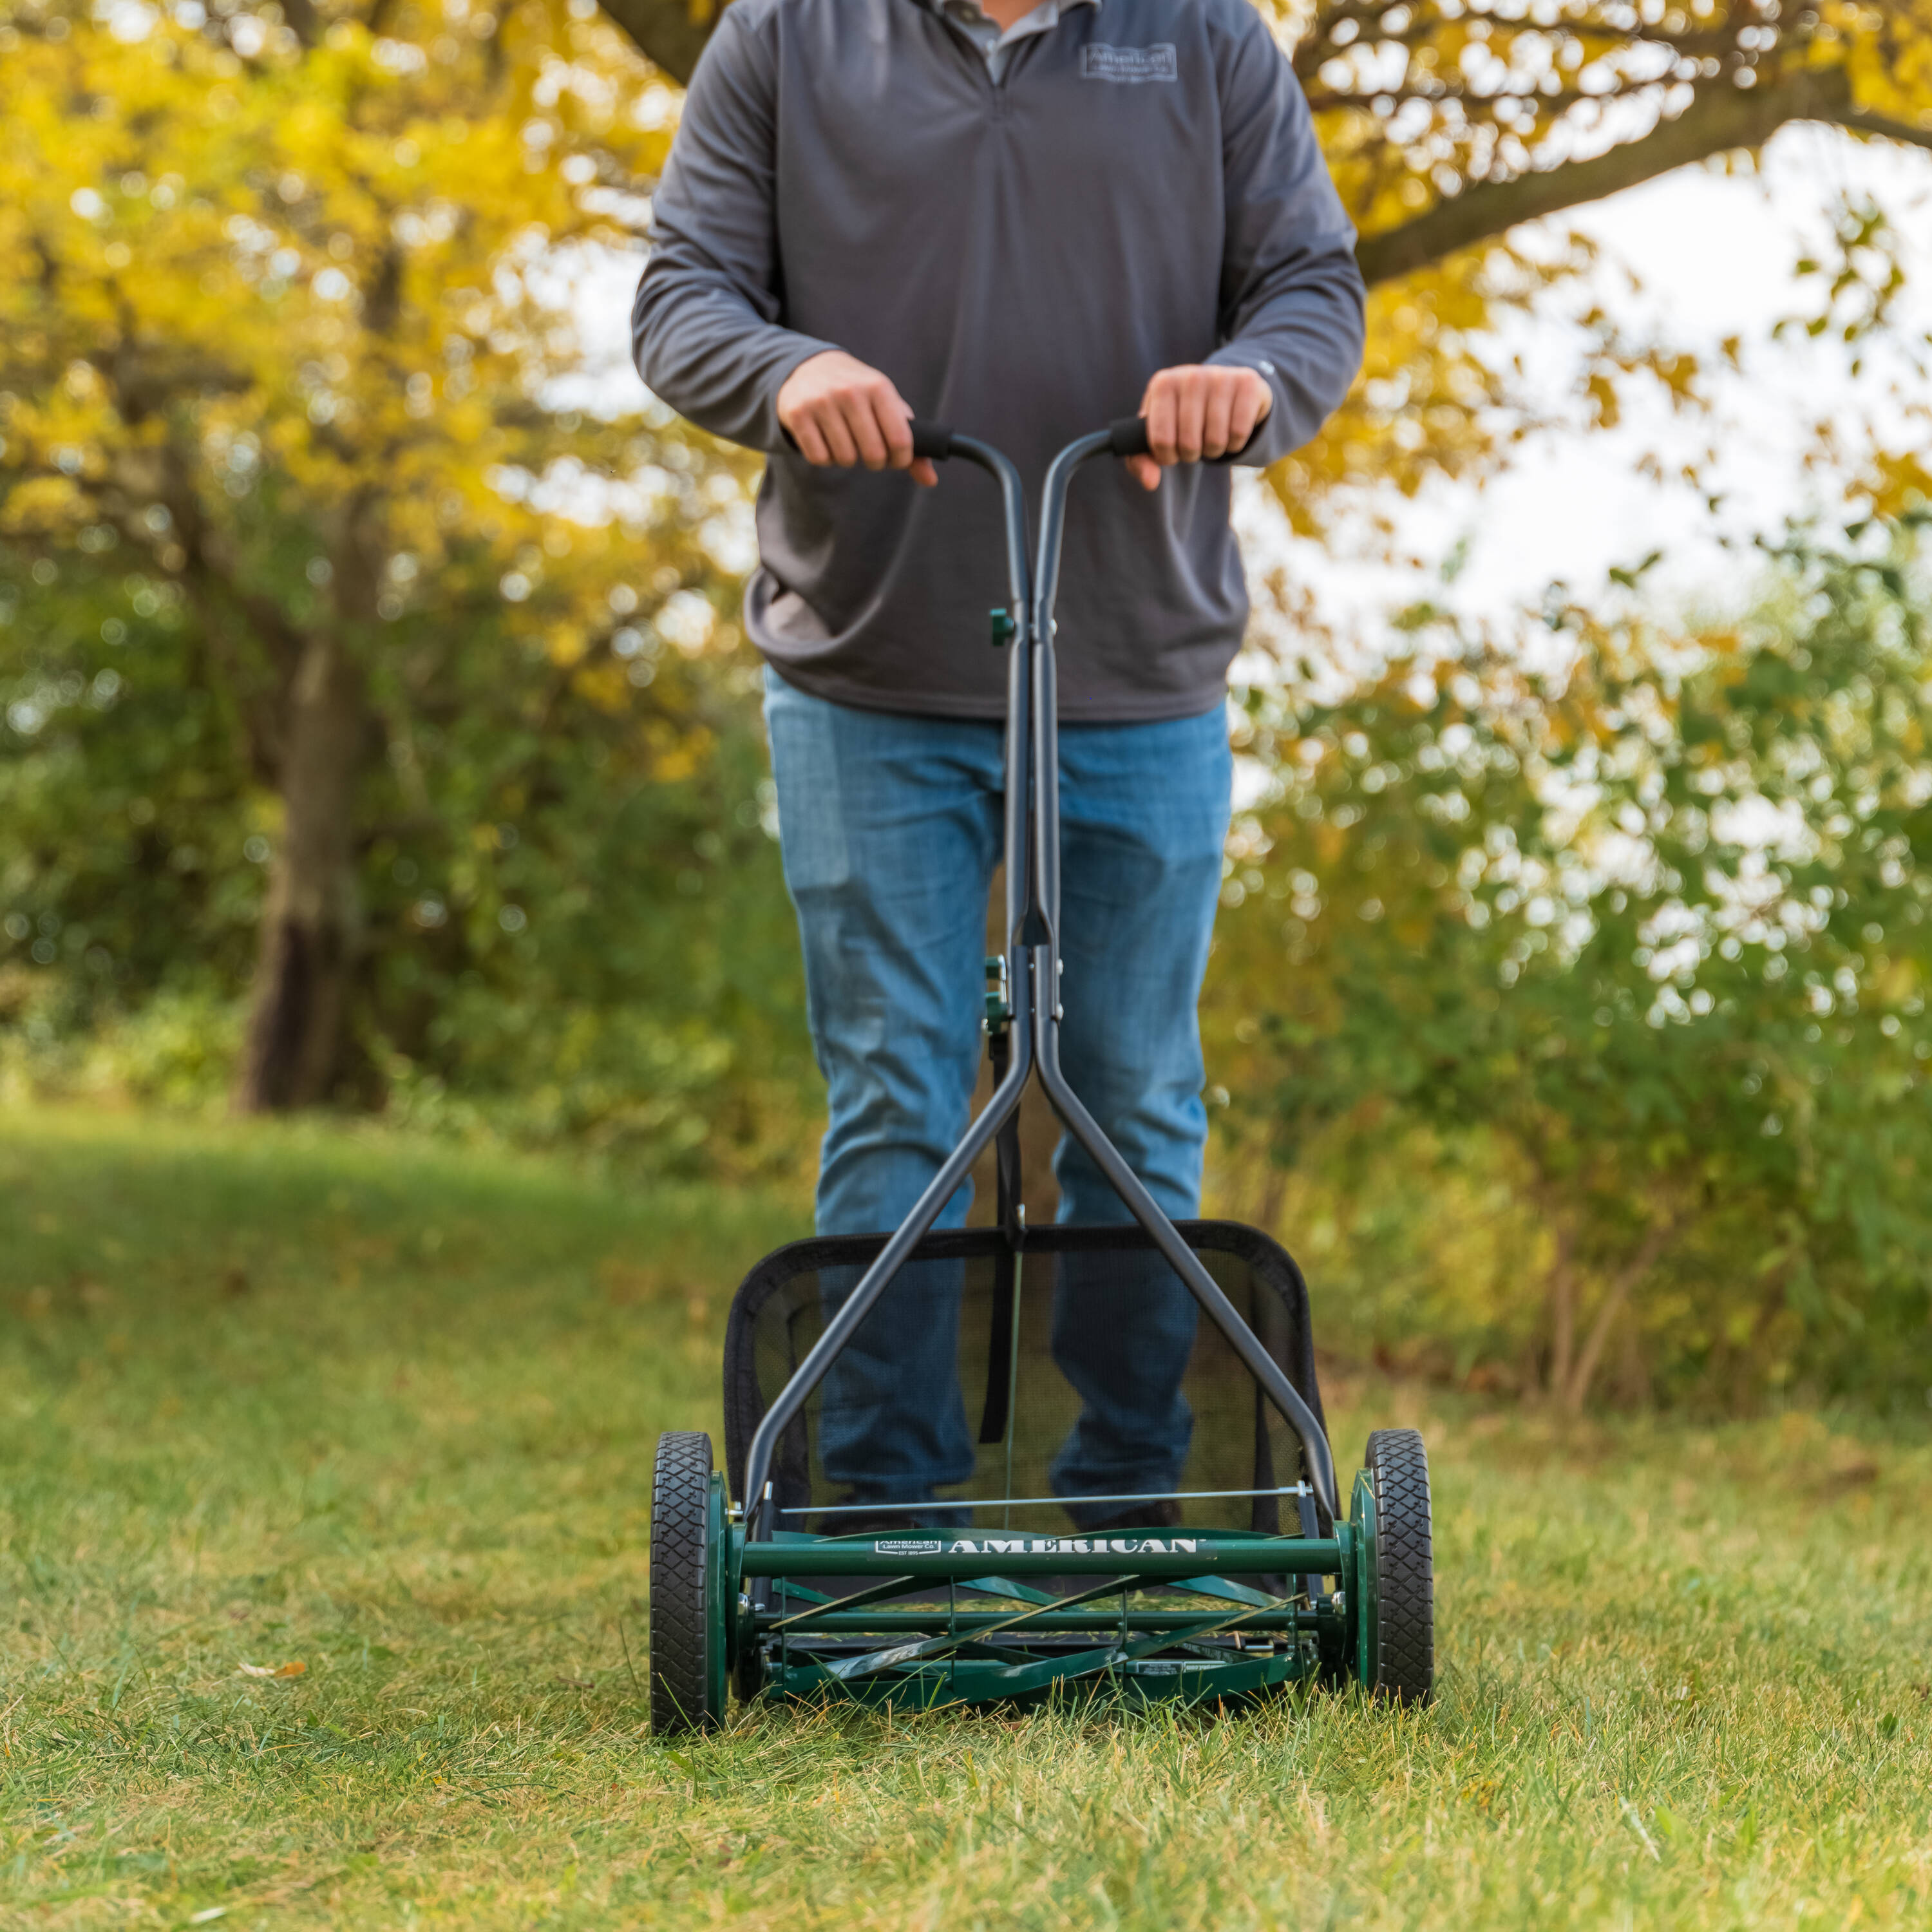 American Lawn Mower 16-Inch Reel Lawn Mower with Bagger, 7-Blade